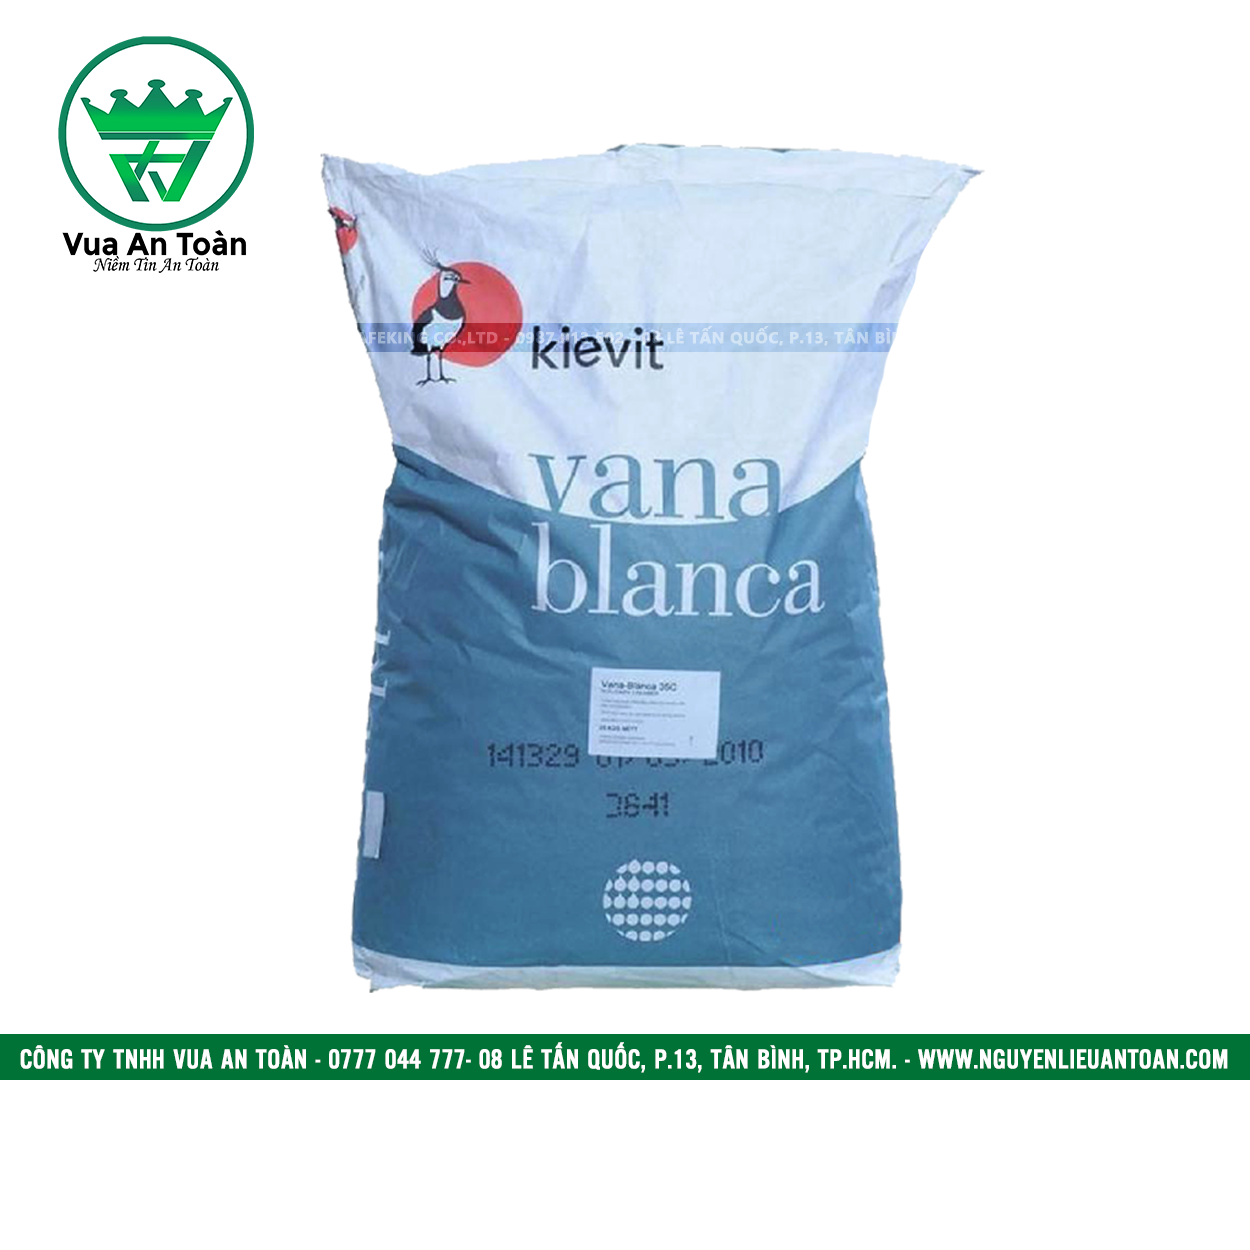 Bột Sữa Kievit (Vana Blanca) – Indonesia 25kg